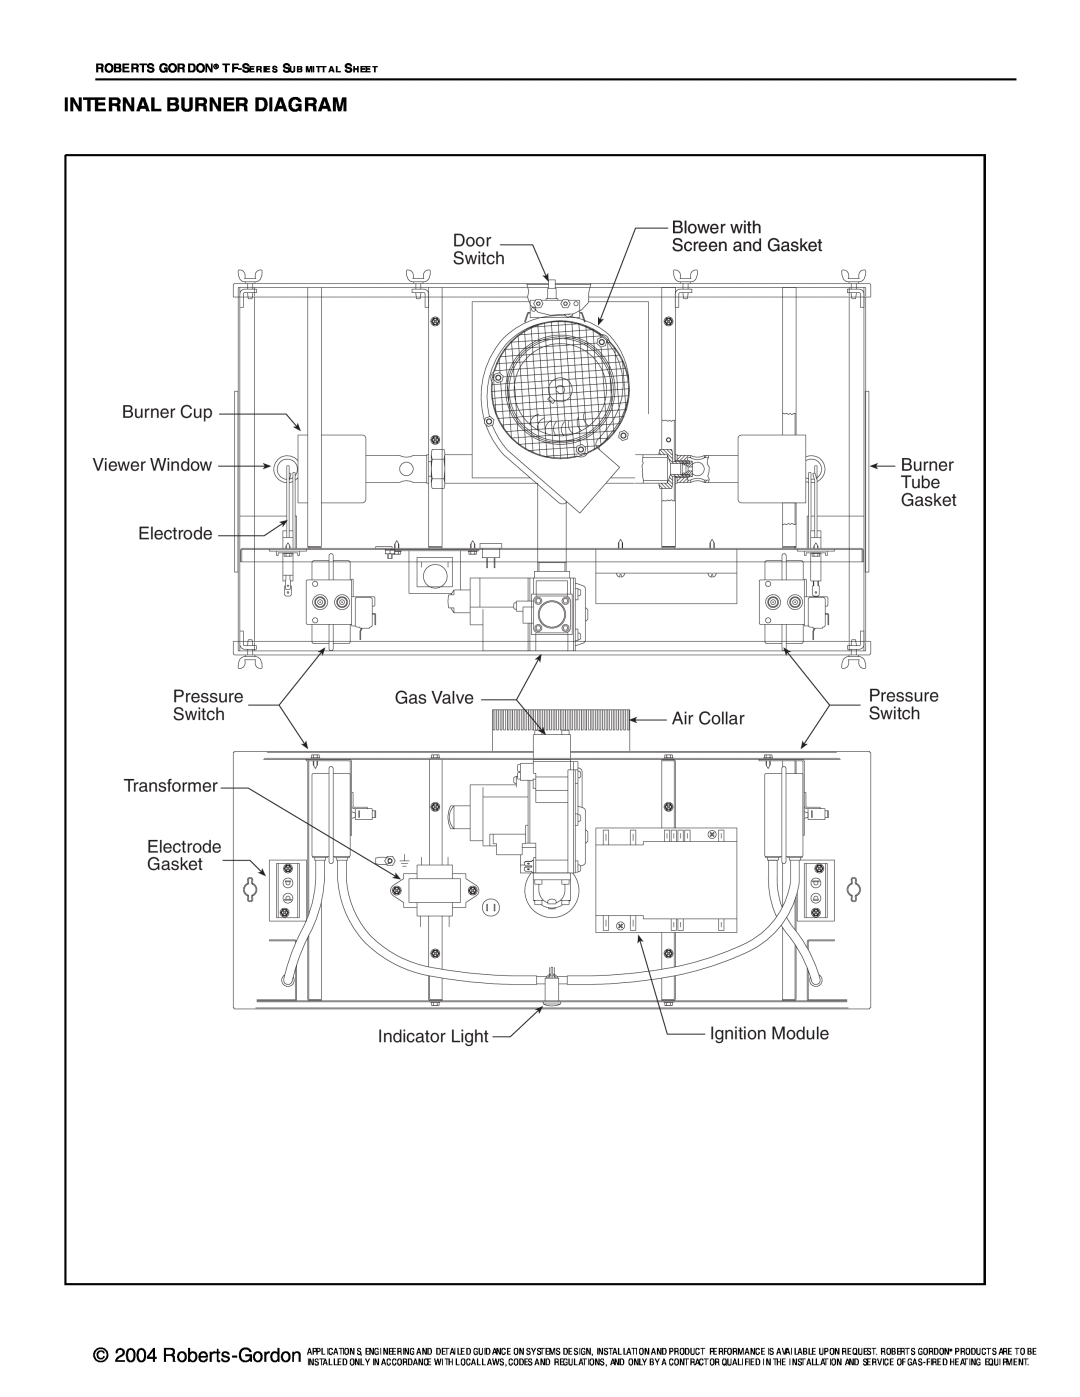 Roberts Gorden TF-Series service manual Internal Burner Diagram, Blower with DoorScreen and Gasket 